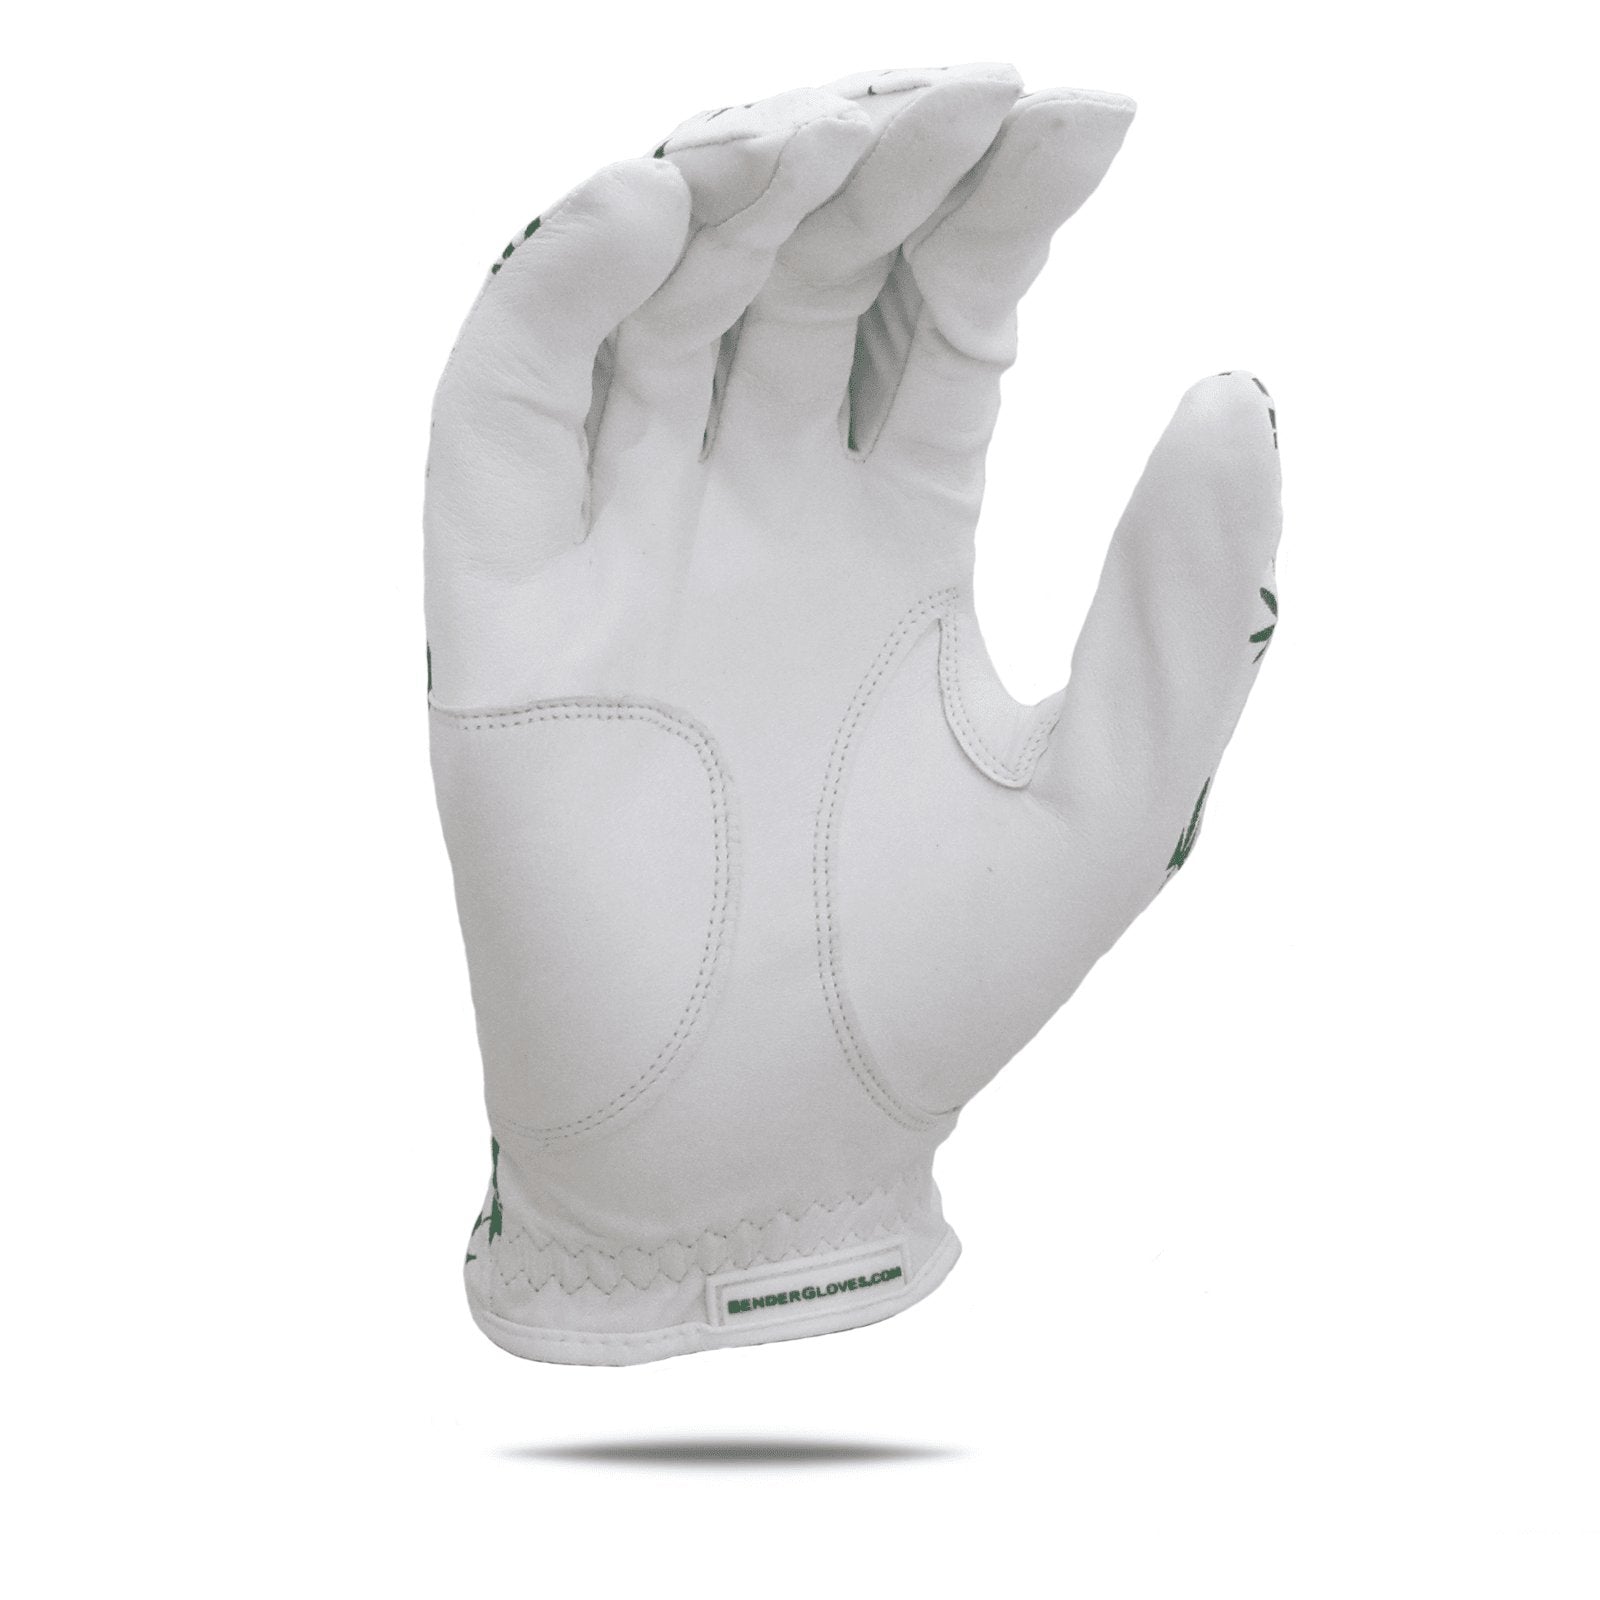 Marijuana Mesh Golf Glove - Bender Gloves